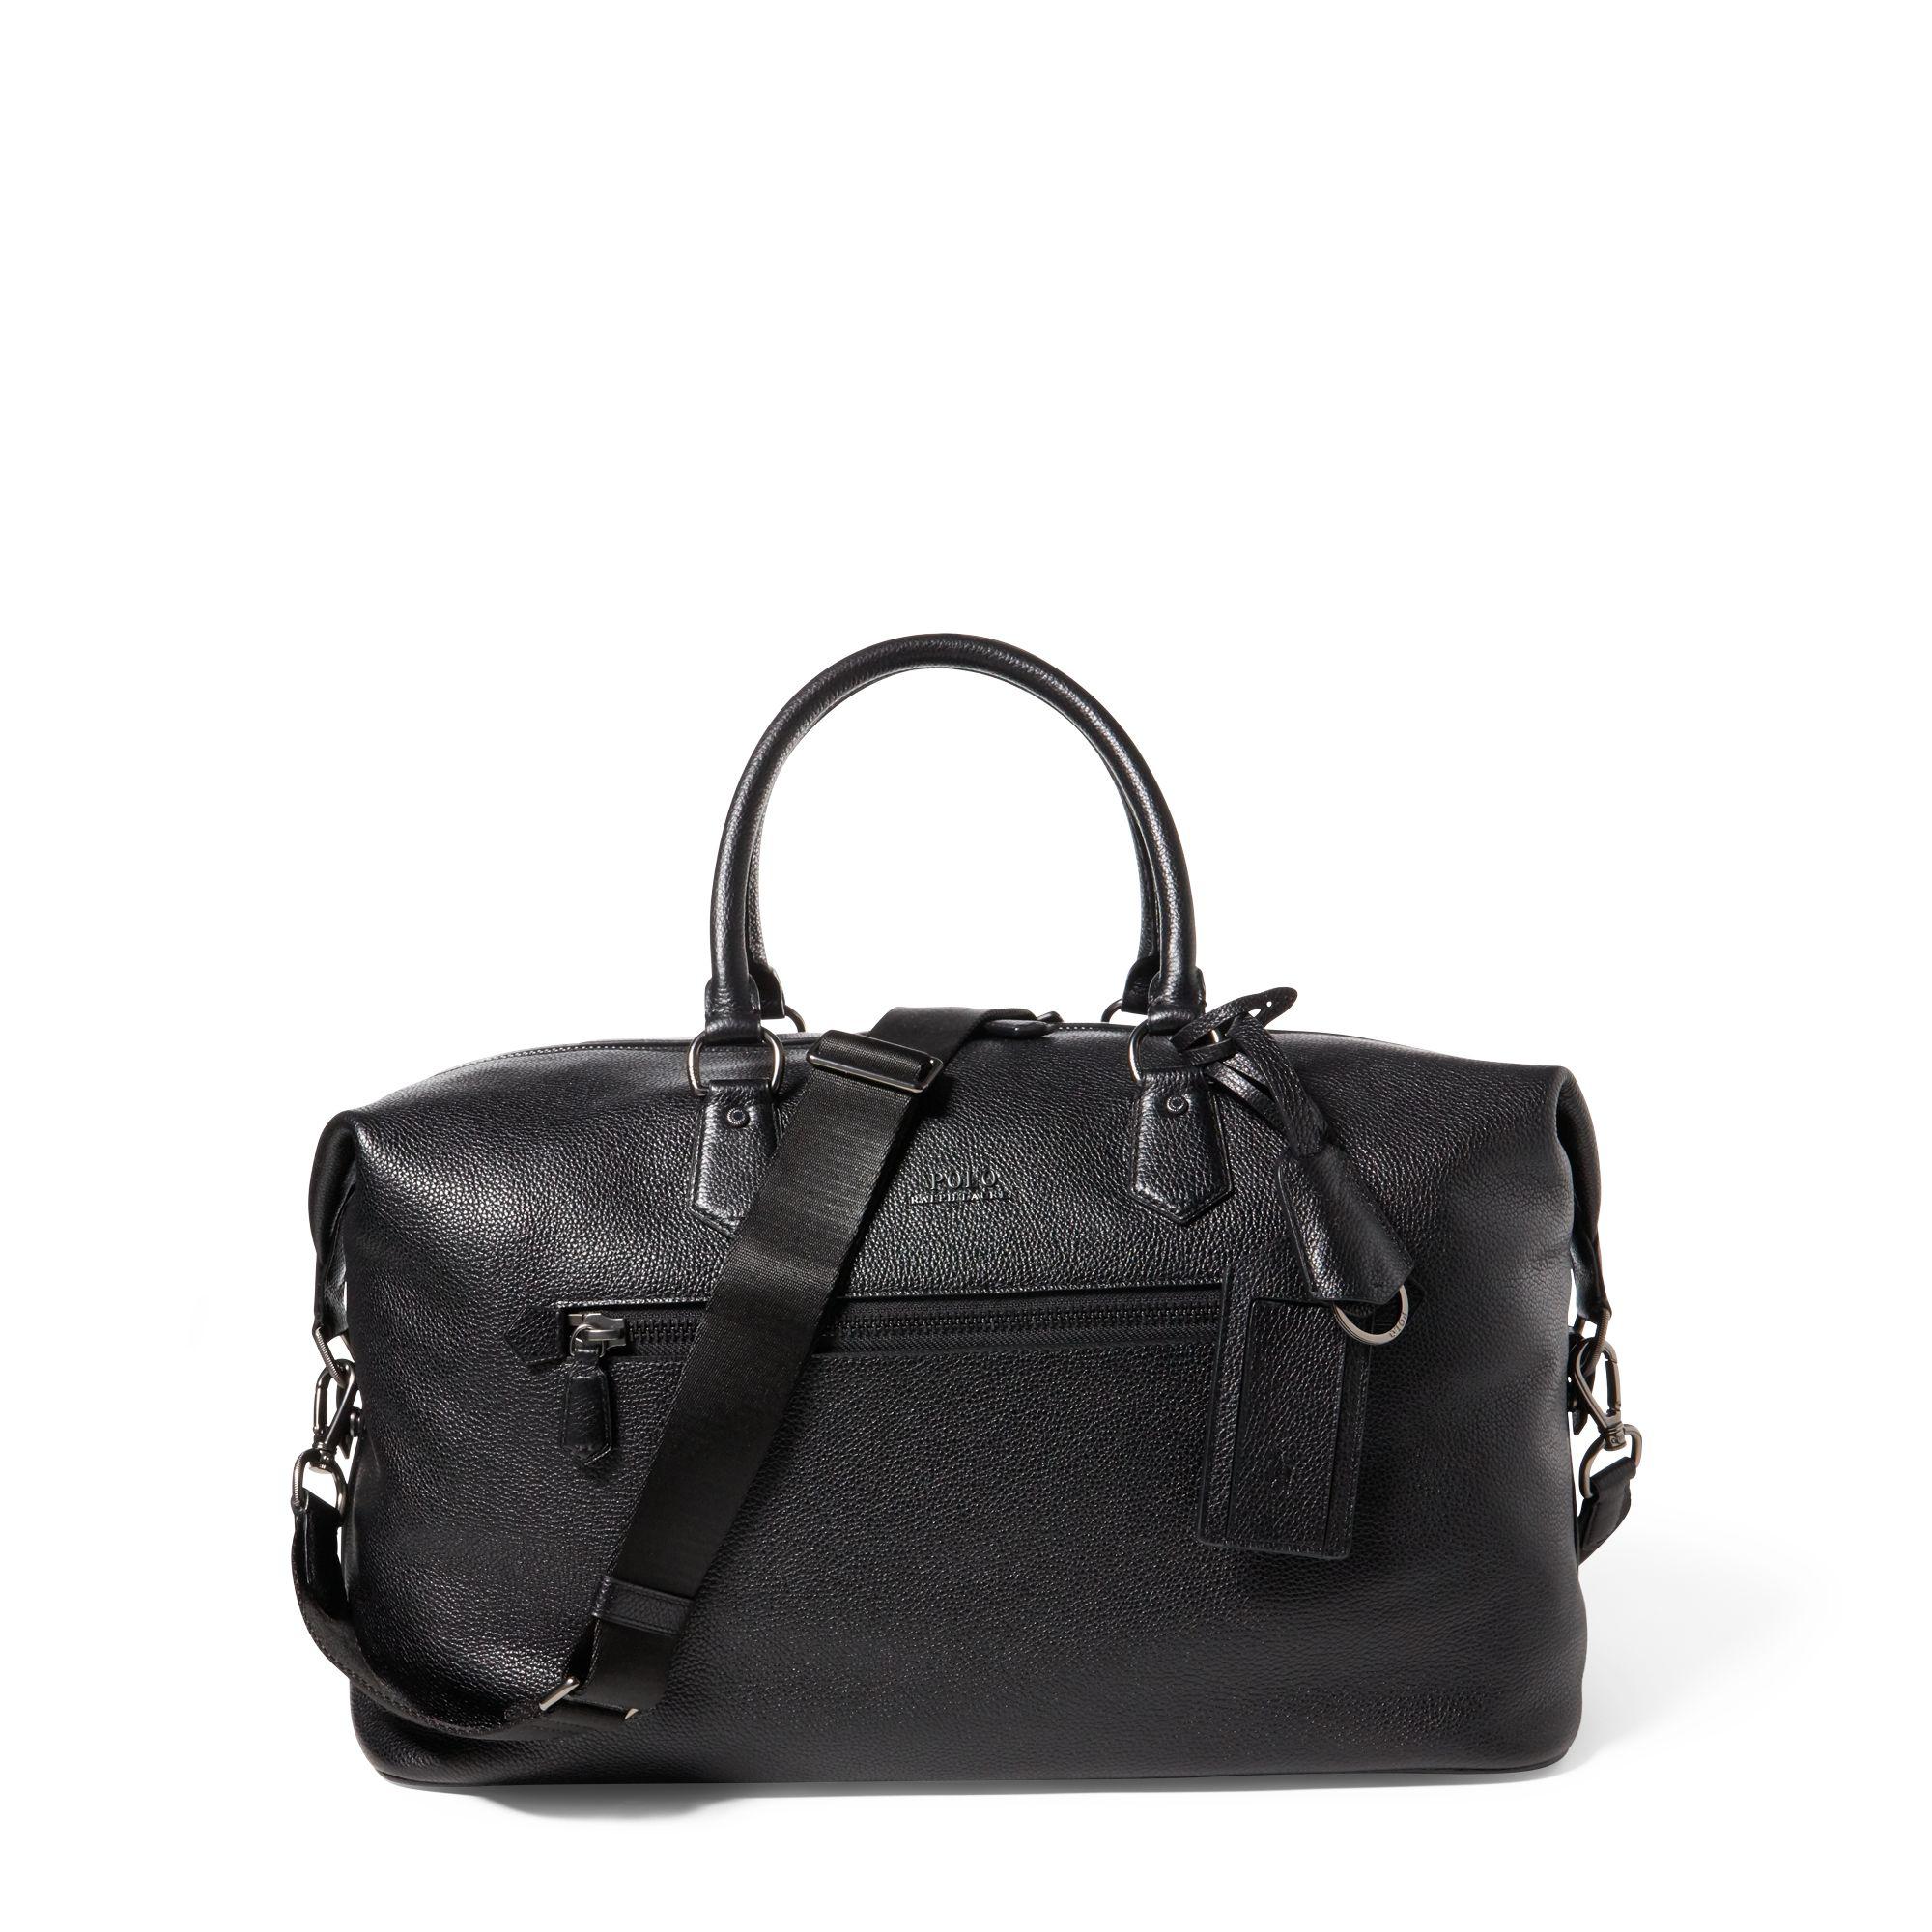 Lyst - Polo Ralph Lauren Pebbled Leather Duffel Bag in Black for Men